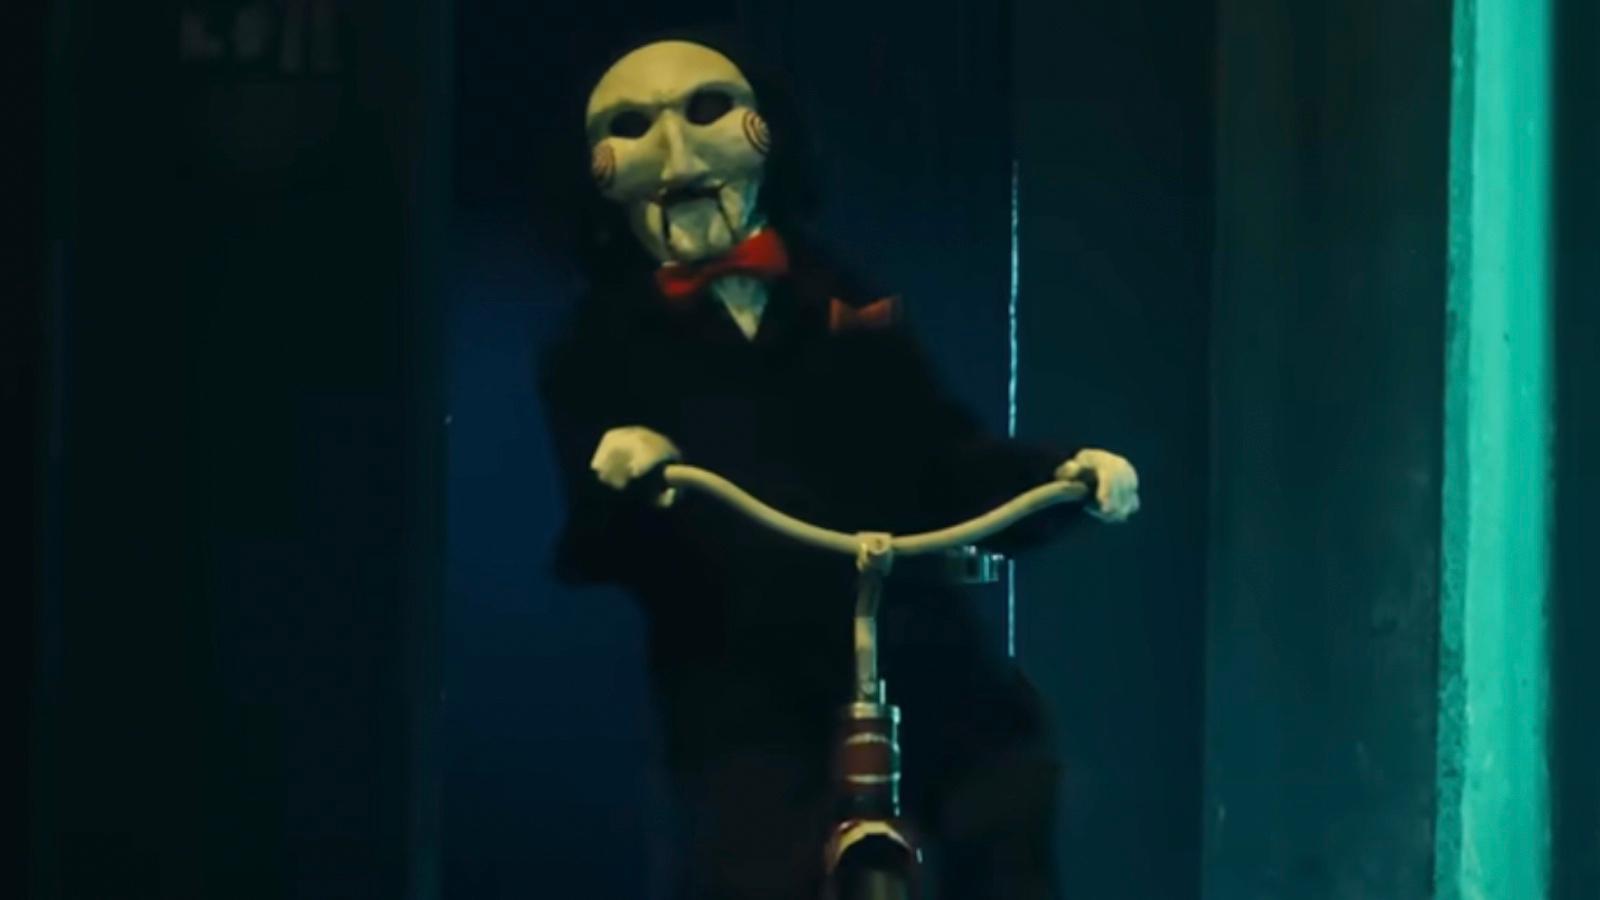 Jigsaw puppet in Saw X trailer